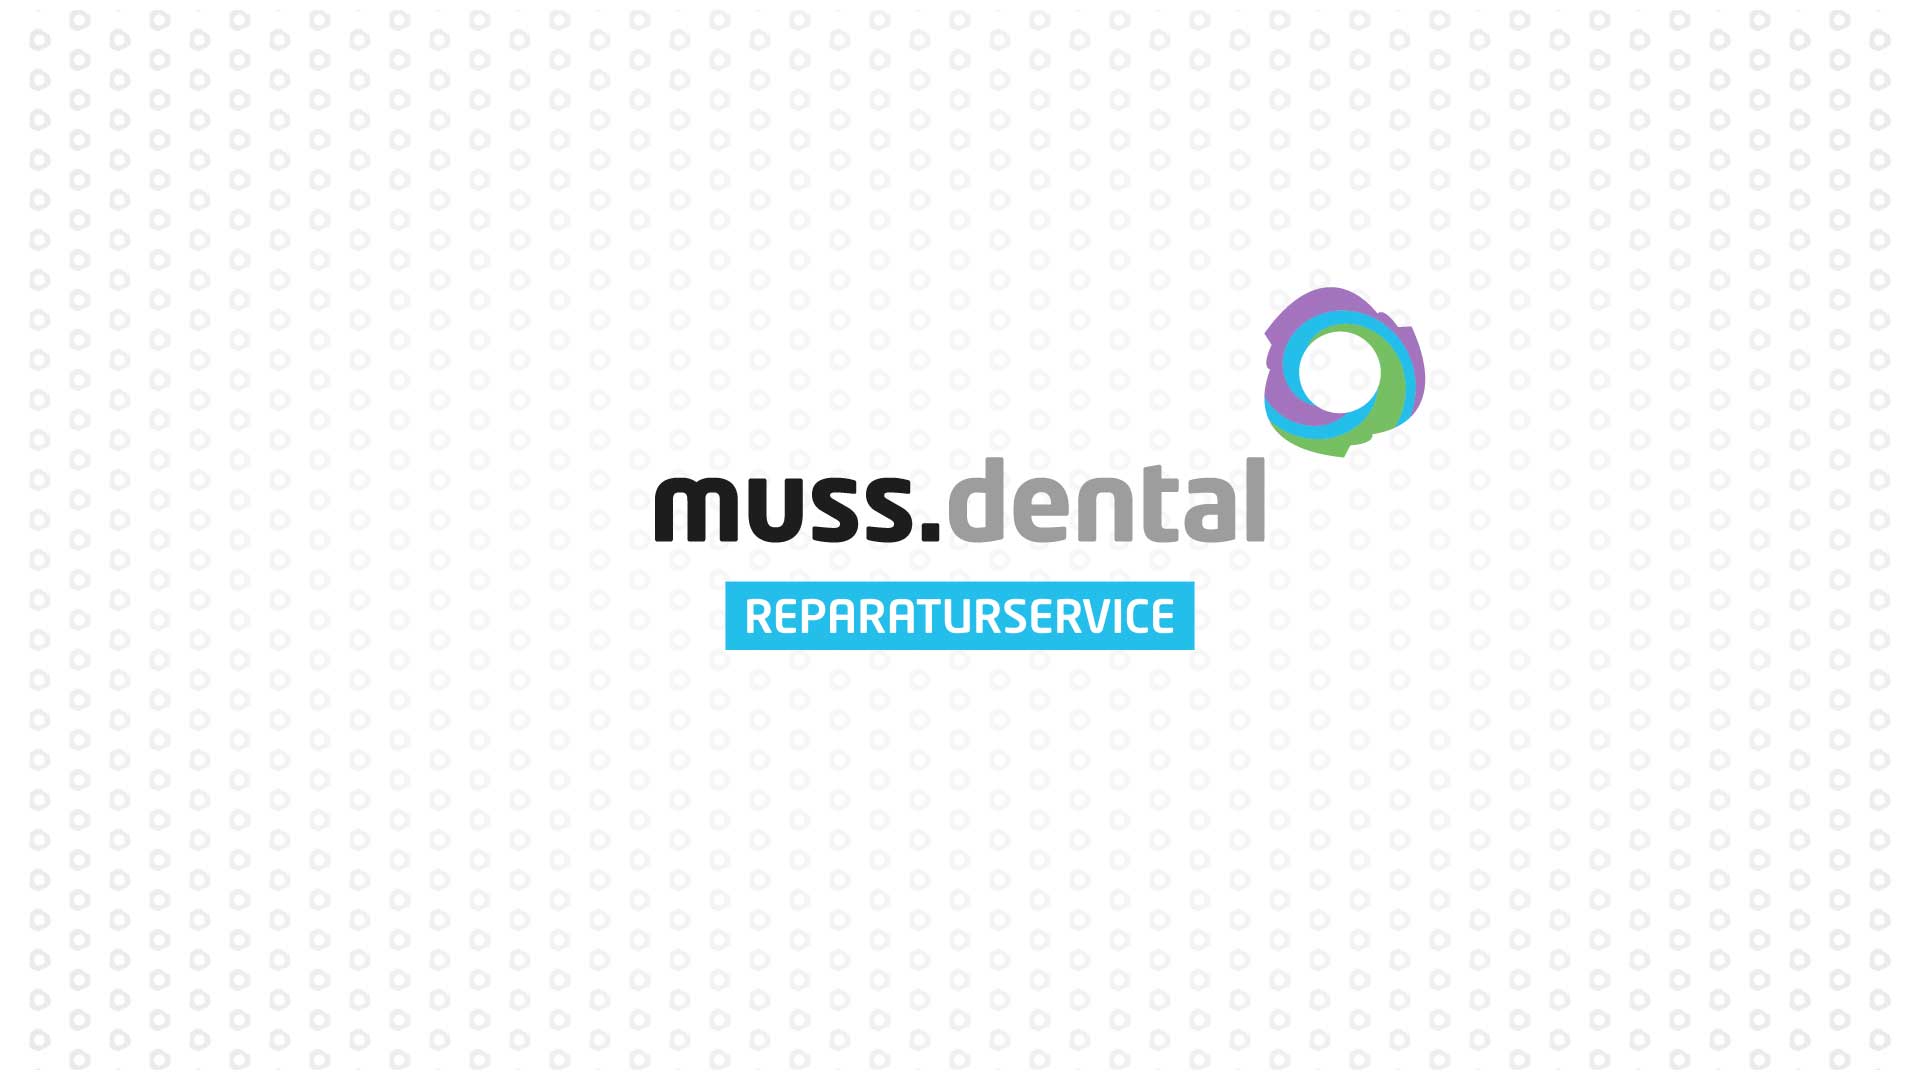 muss.dental Reparaturservice Video-Cover